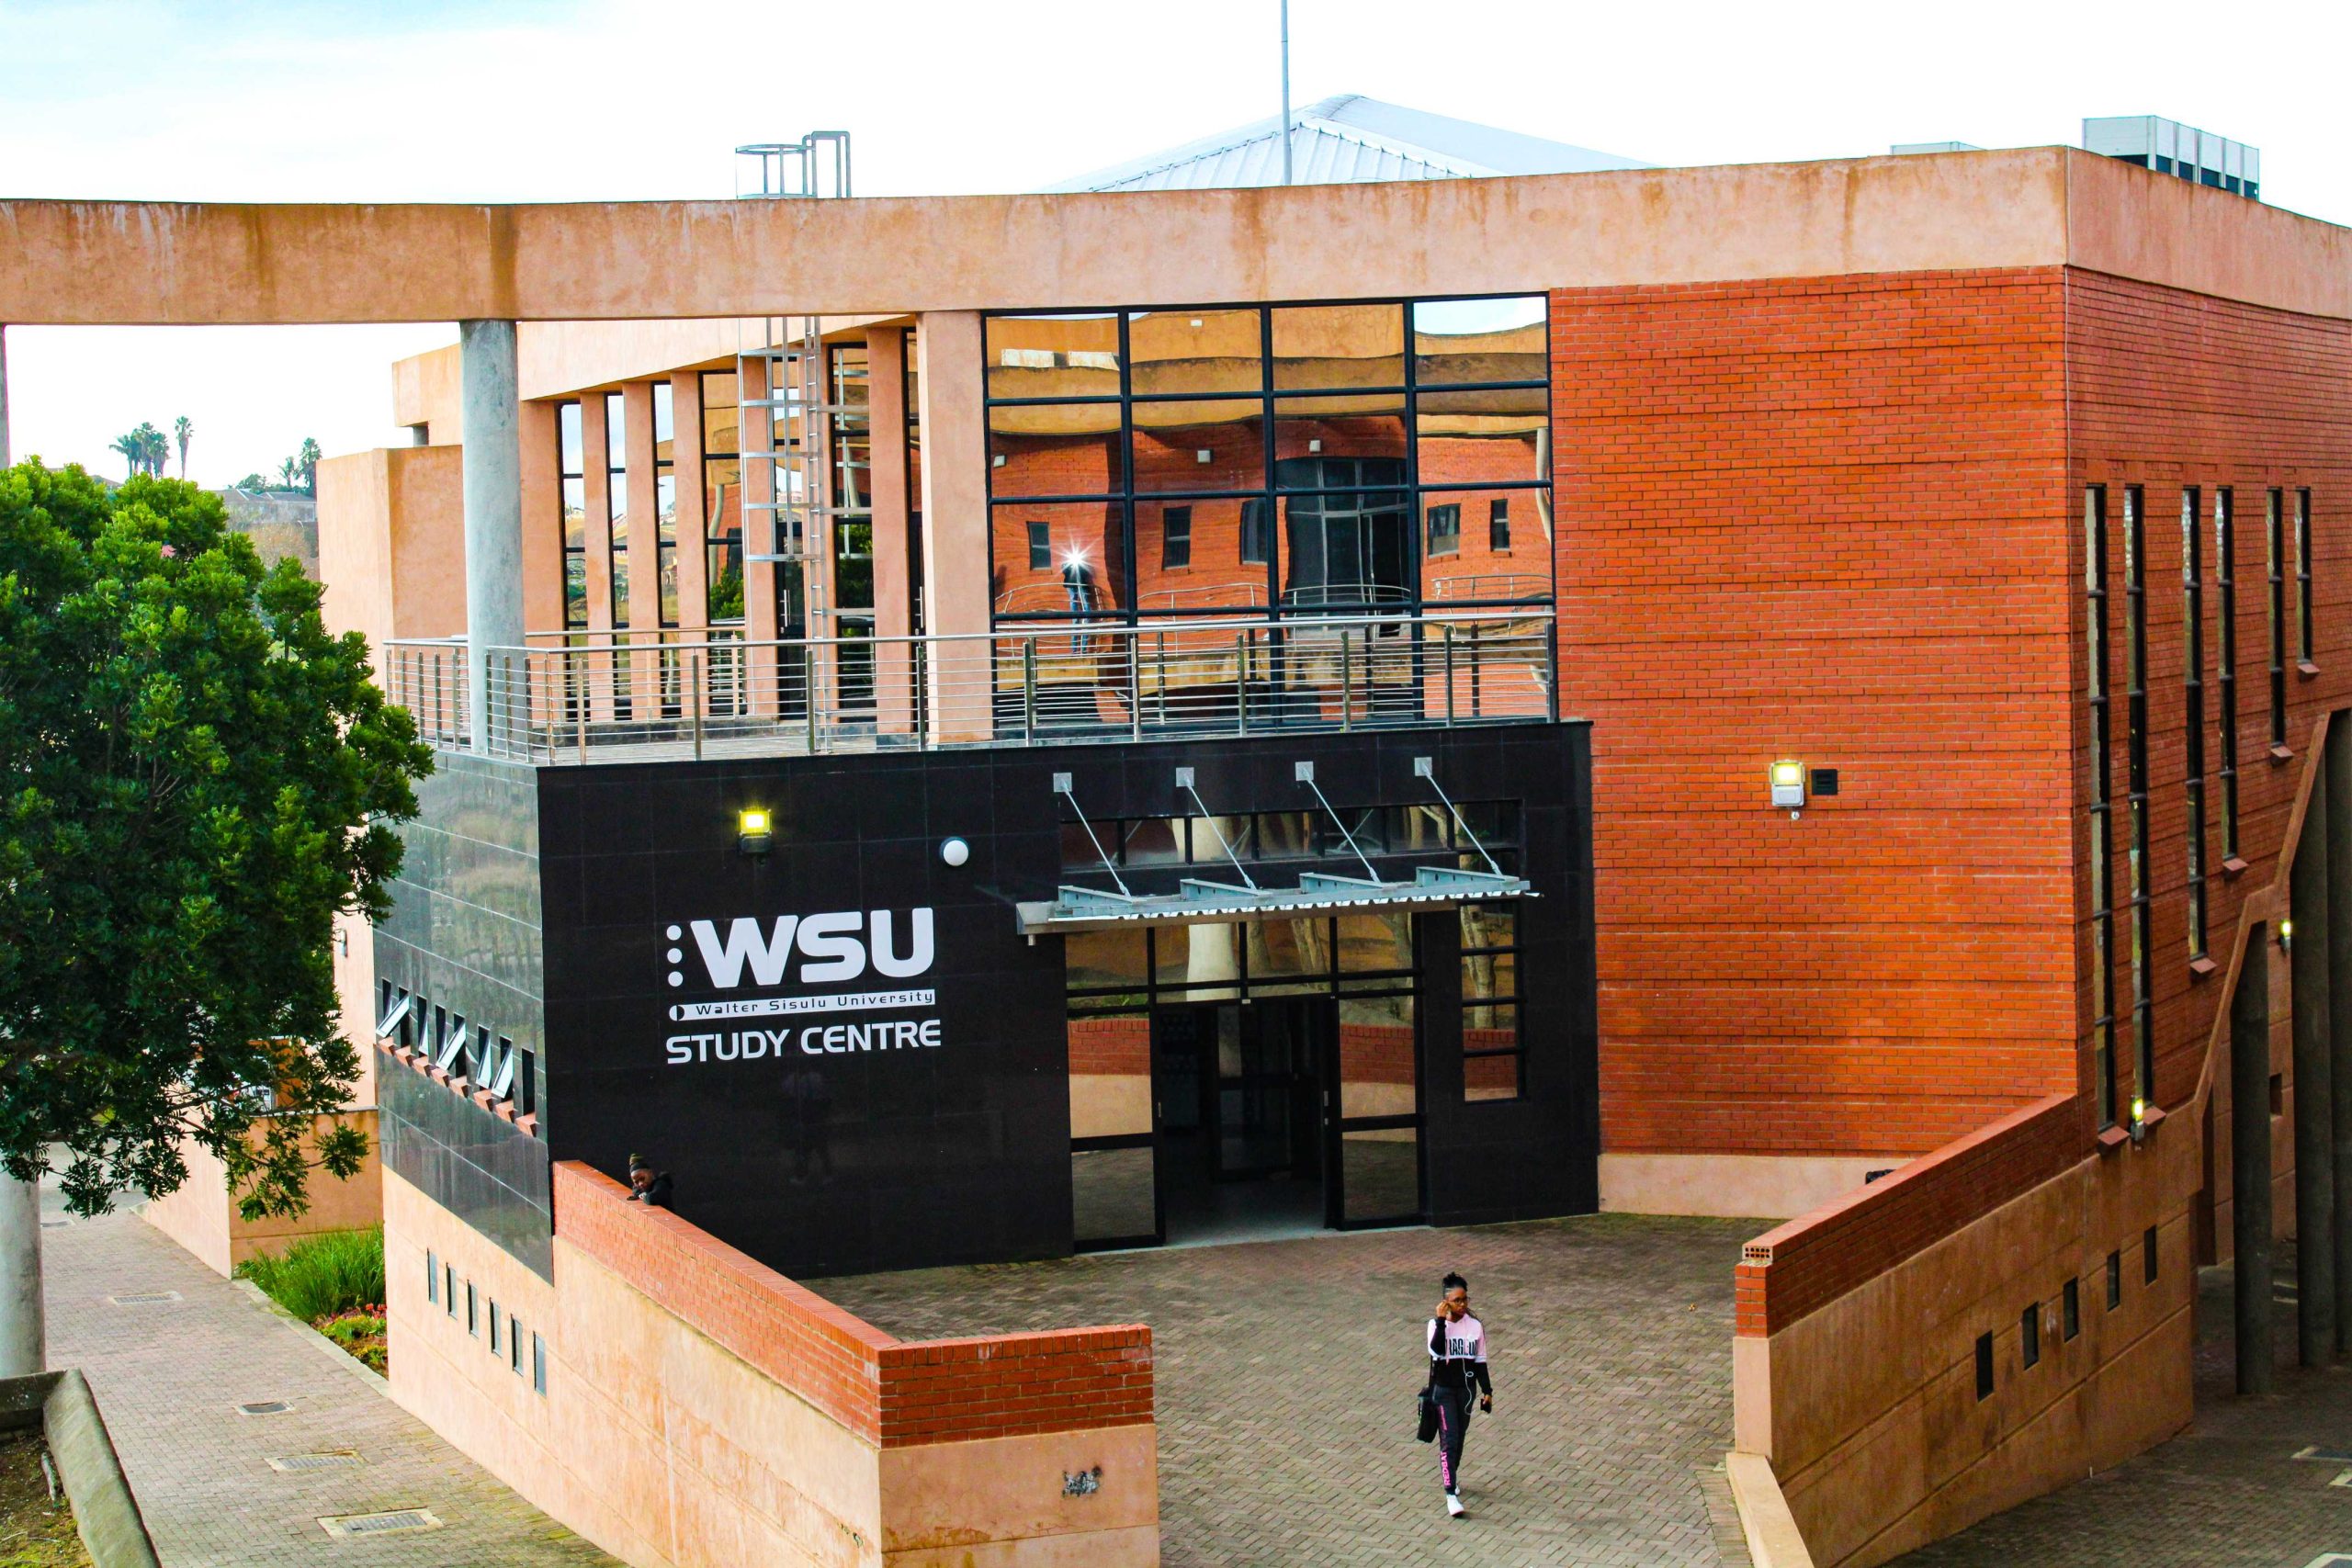 Walter Sisulu University Online Application